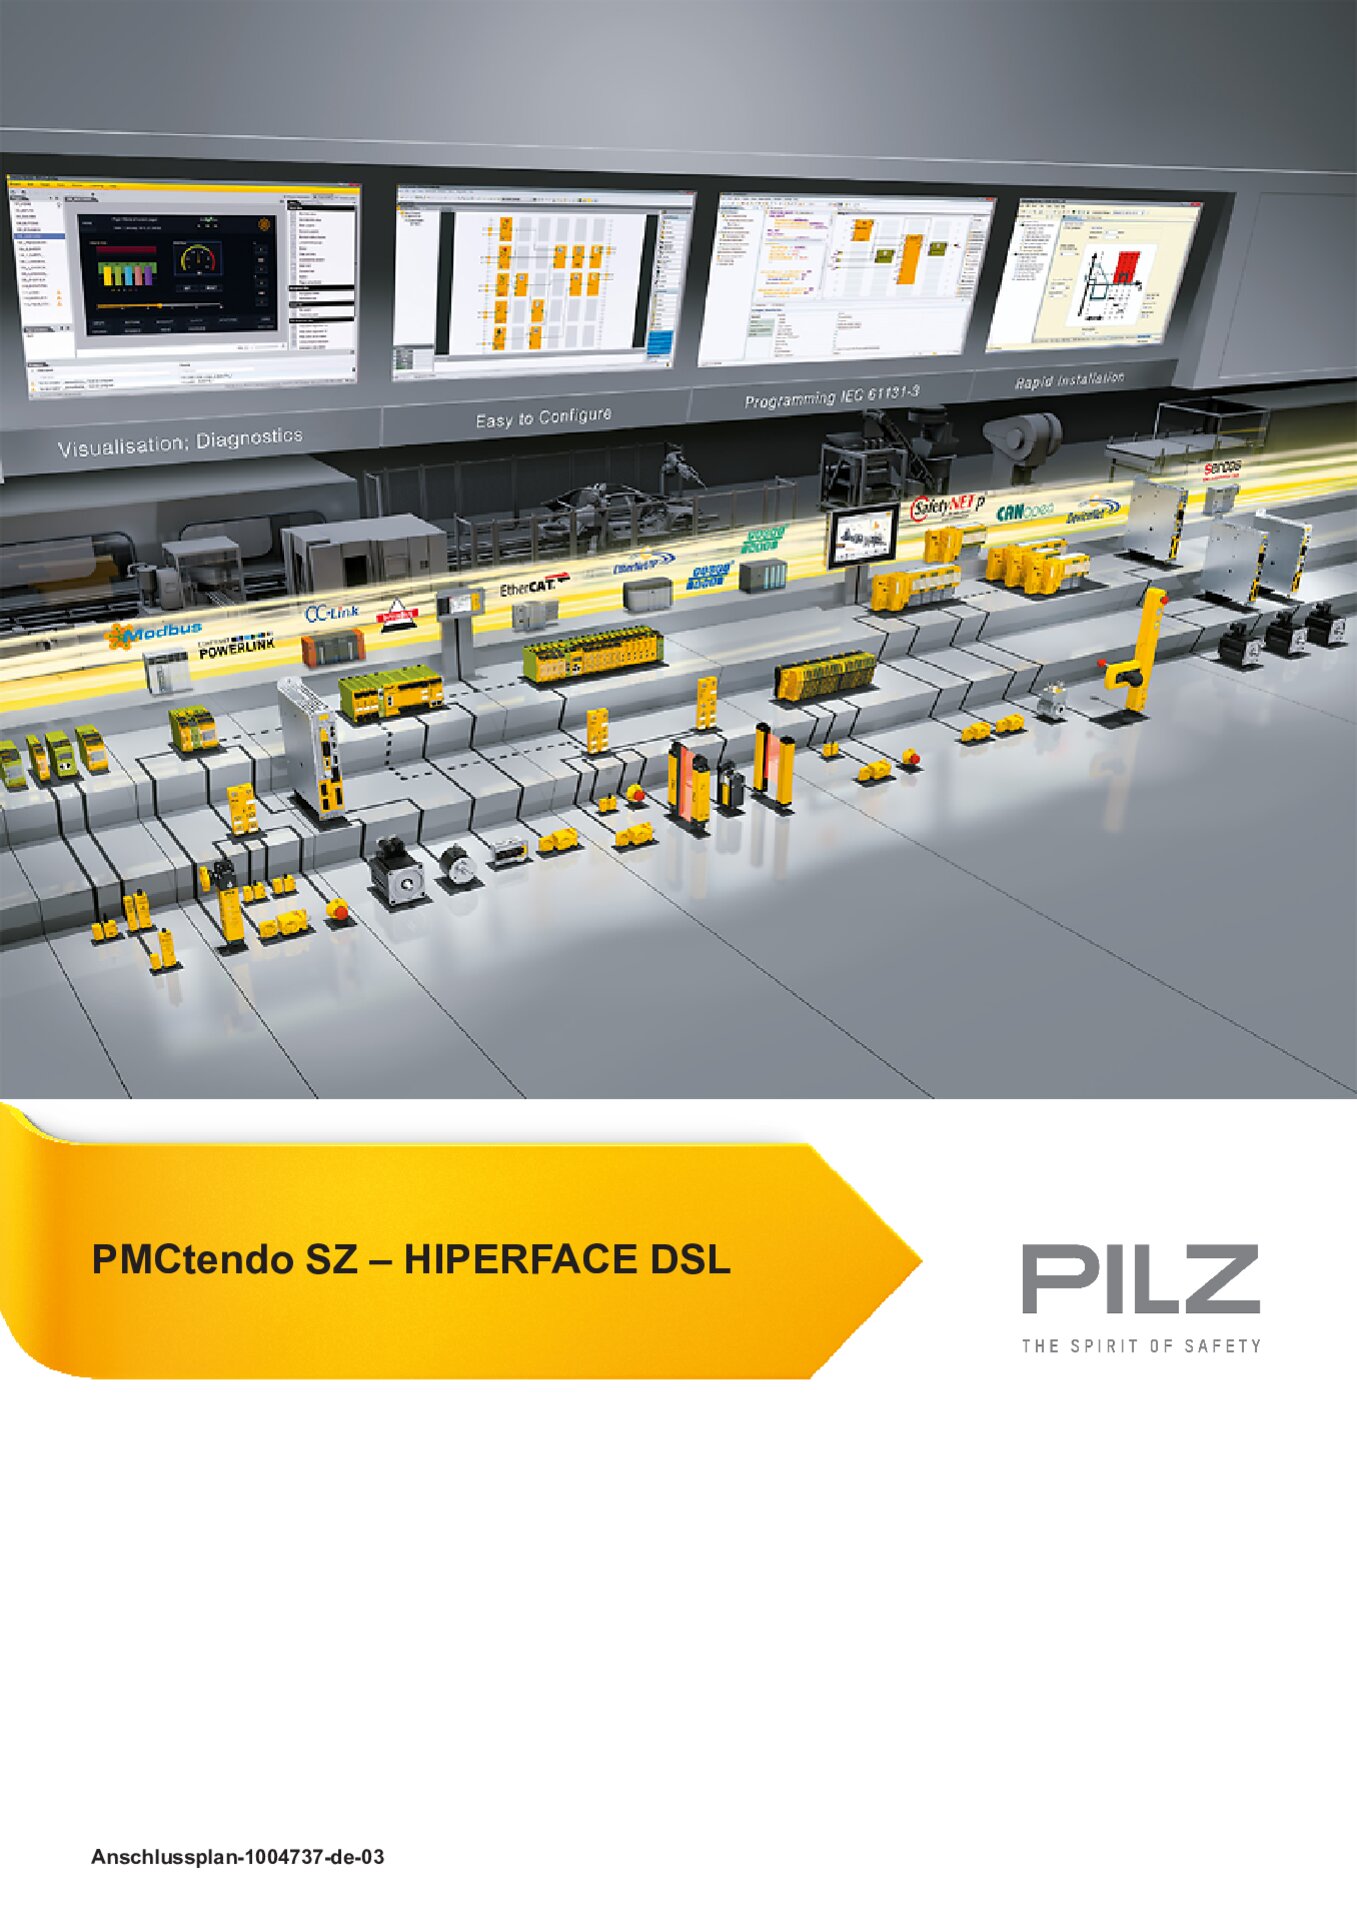 Anschlussplan PMCtendo SZ Feedback HIPERFACE DSL (Pilz ID 1004737-DE-03)